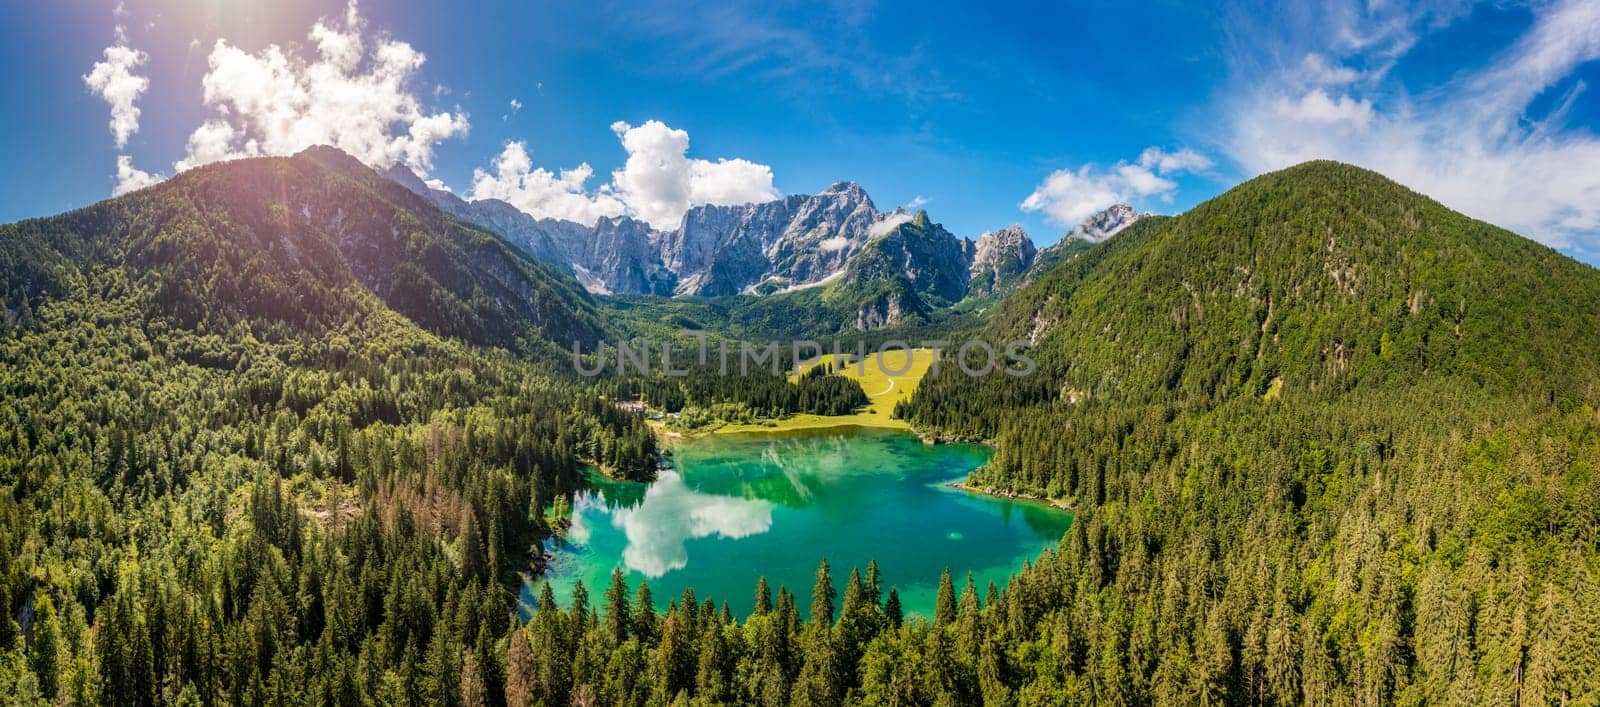 Lake of Fusine (Lago Superiore di Fusine) and the Mountain Range of Mount Mangart, Julian Alps, Tarvisio, Udine province, Friuli Venezia Giulia, Italy, Europe. Picturesque lake Lago Fusine in Italy. by DaLiu